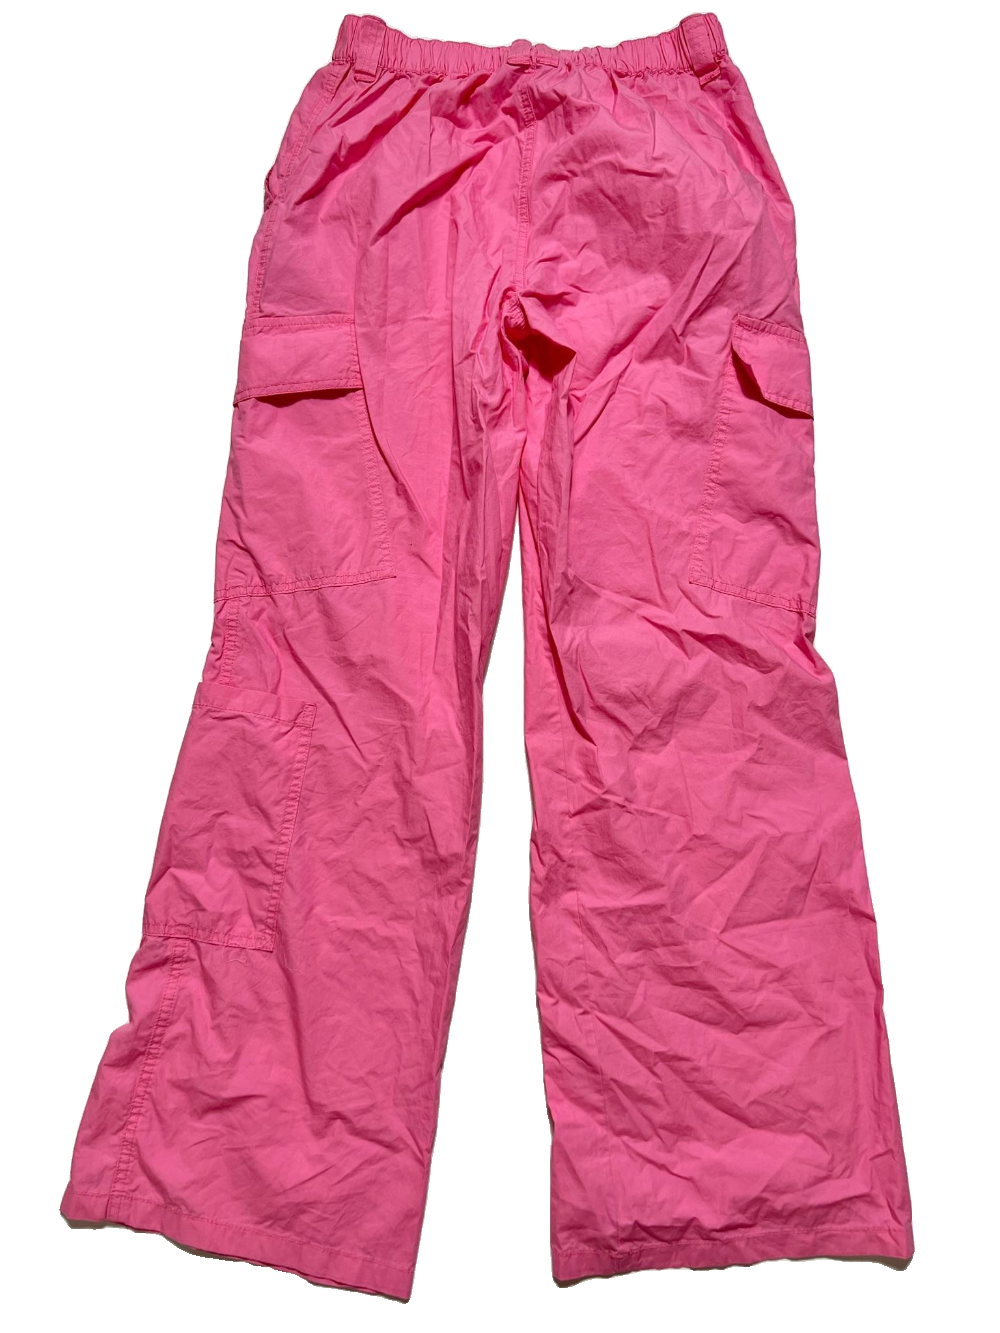 Asos - Hot Pink Cargo Pants